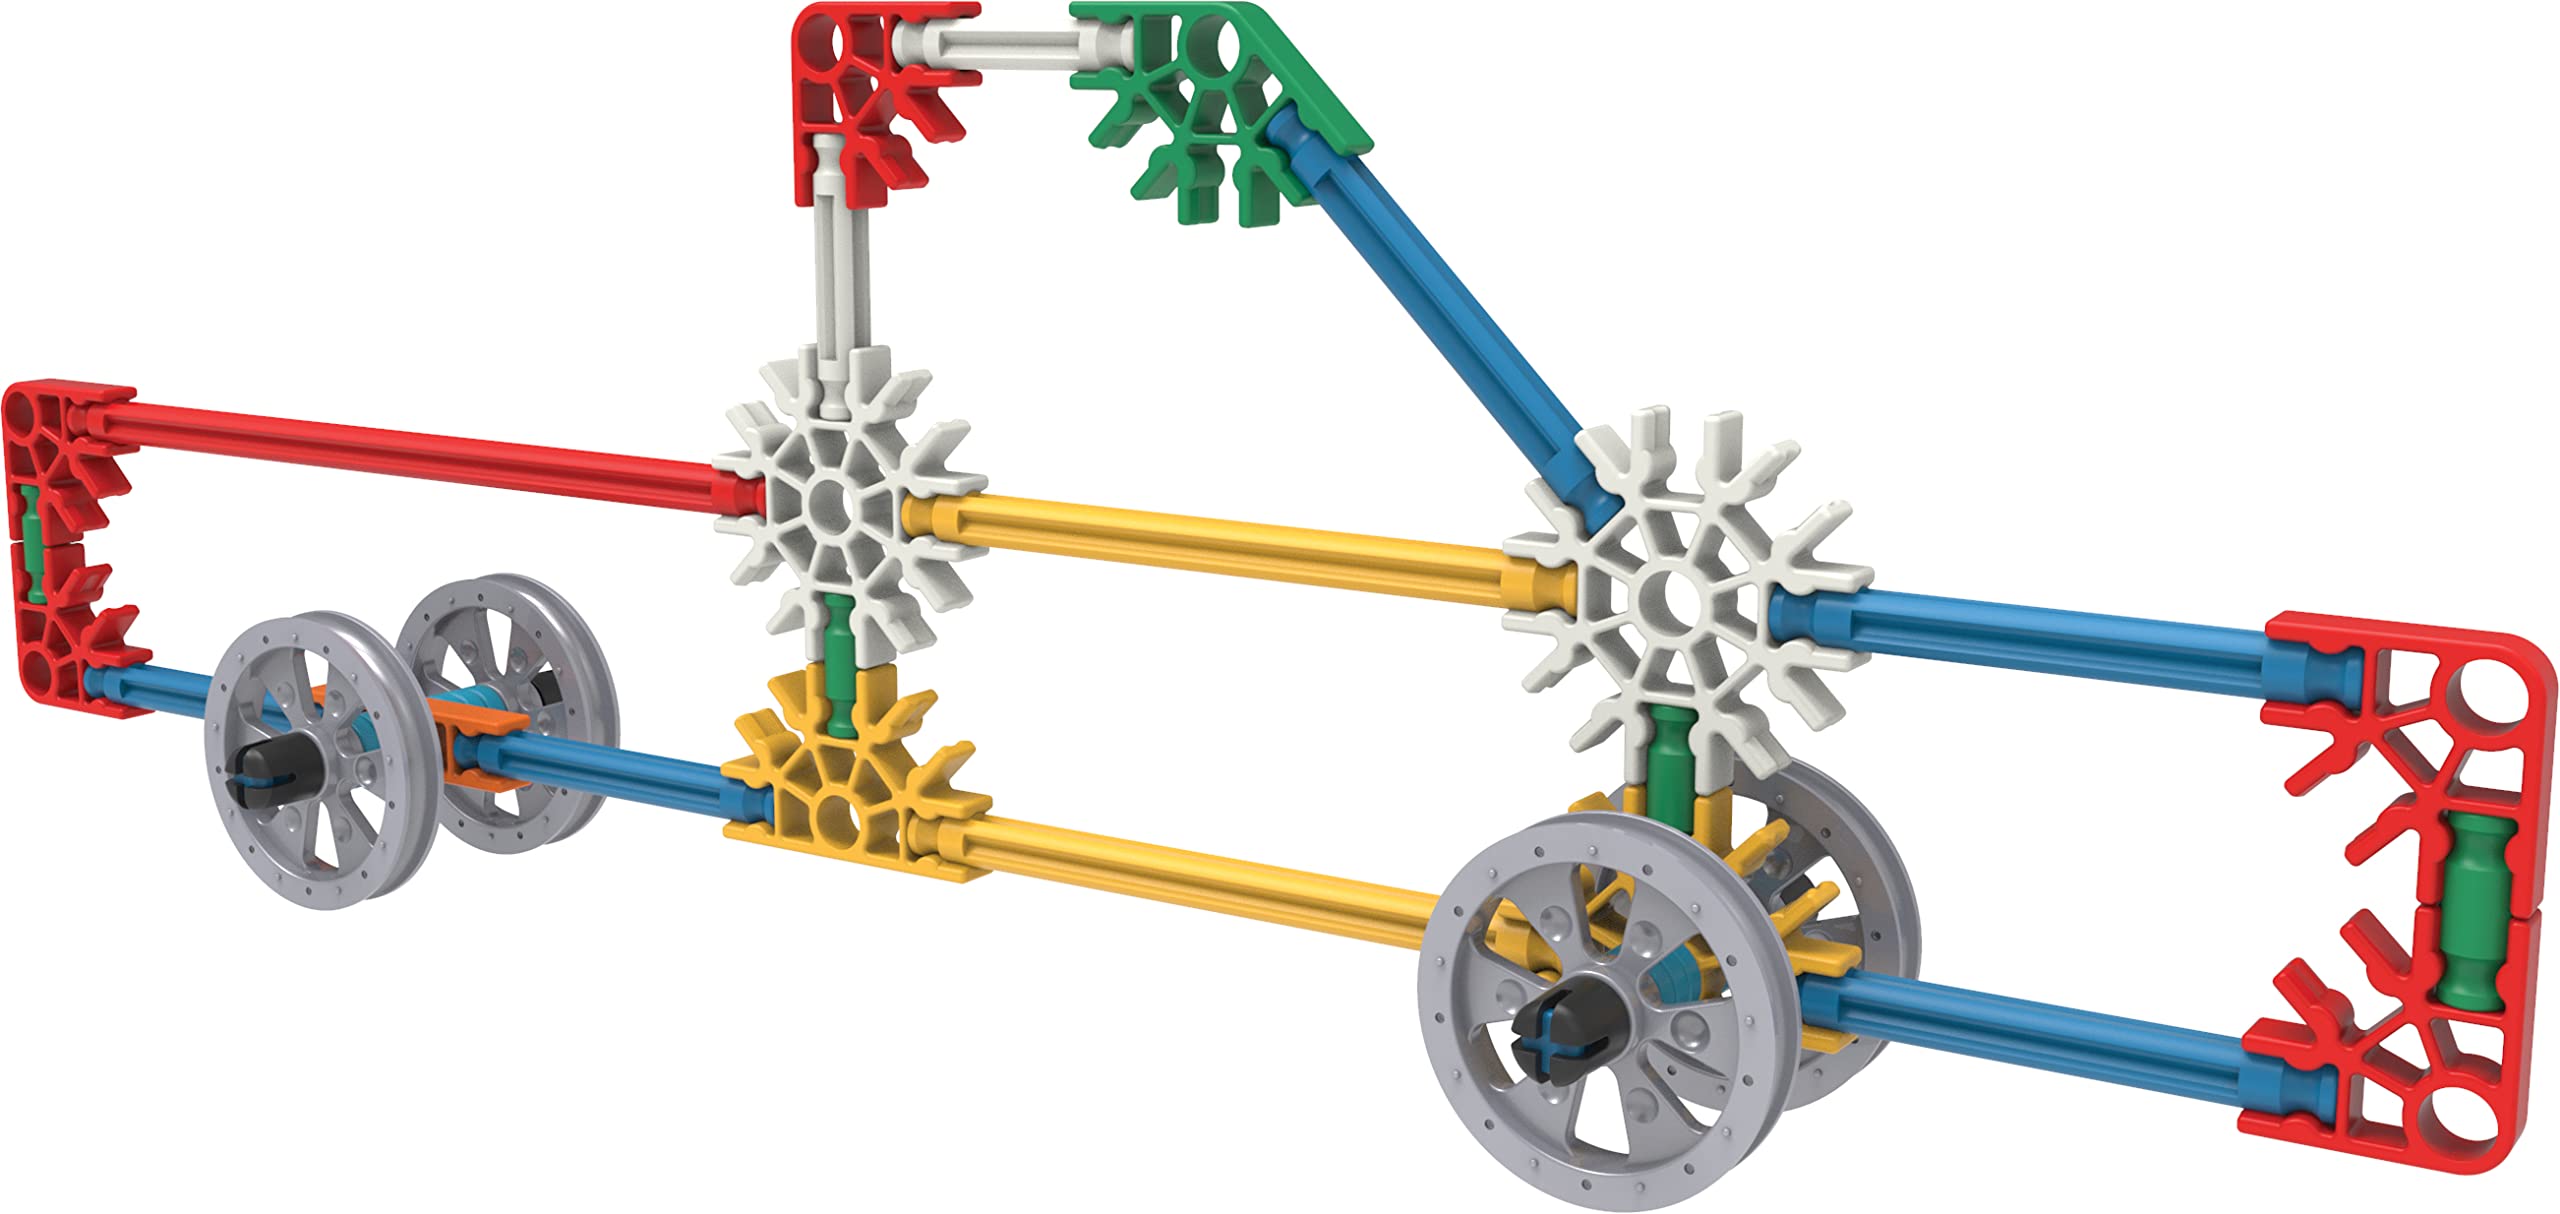 K'NEX Imagine - Click & Construct Value Building Set - 522Piece - 35 Models - Engineering Educational Toy